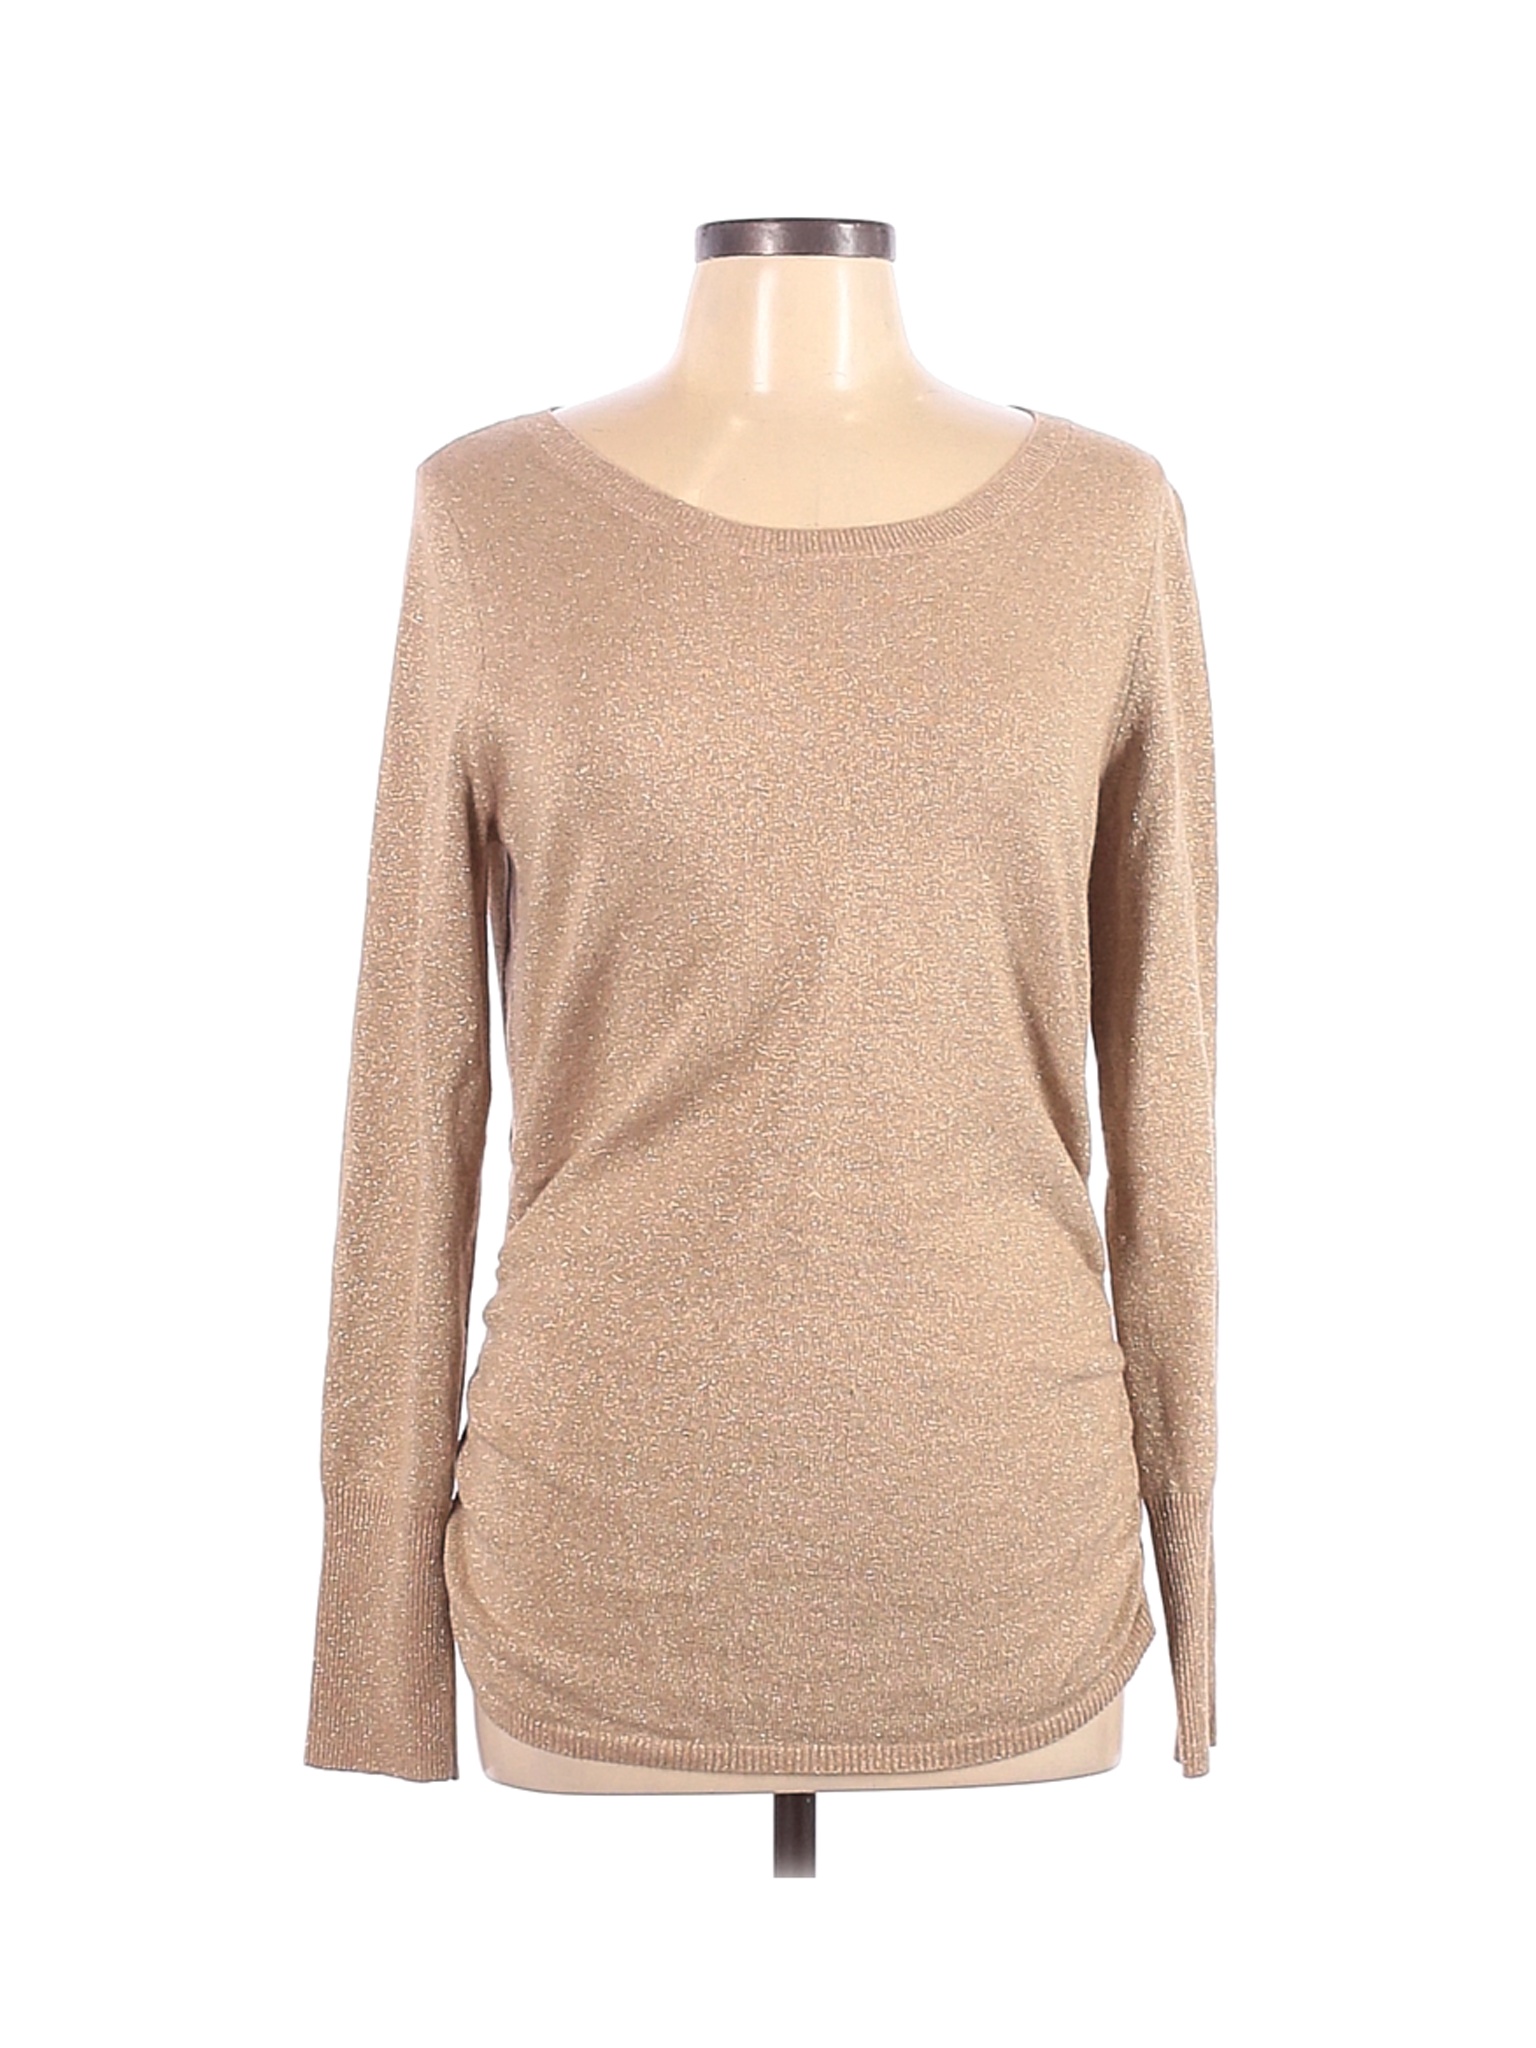 Banana Republic Women Brown Pullover Sweater L | eBay